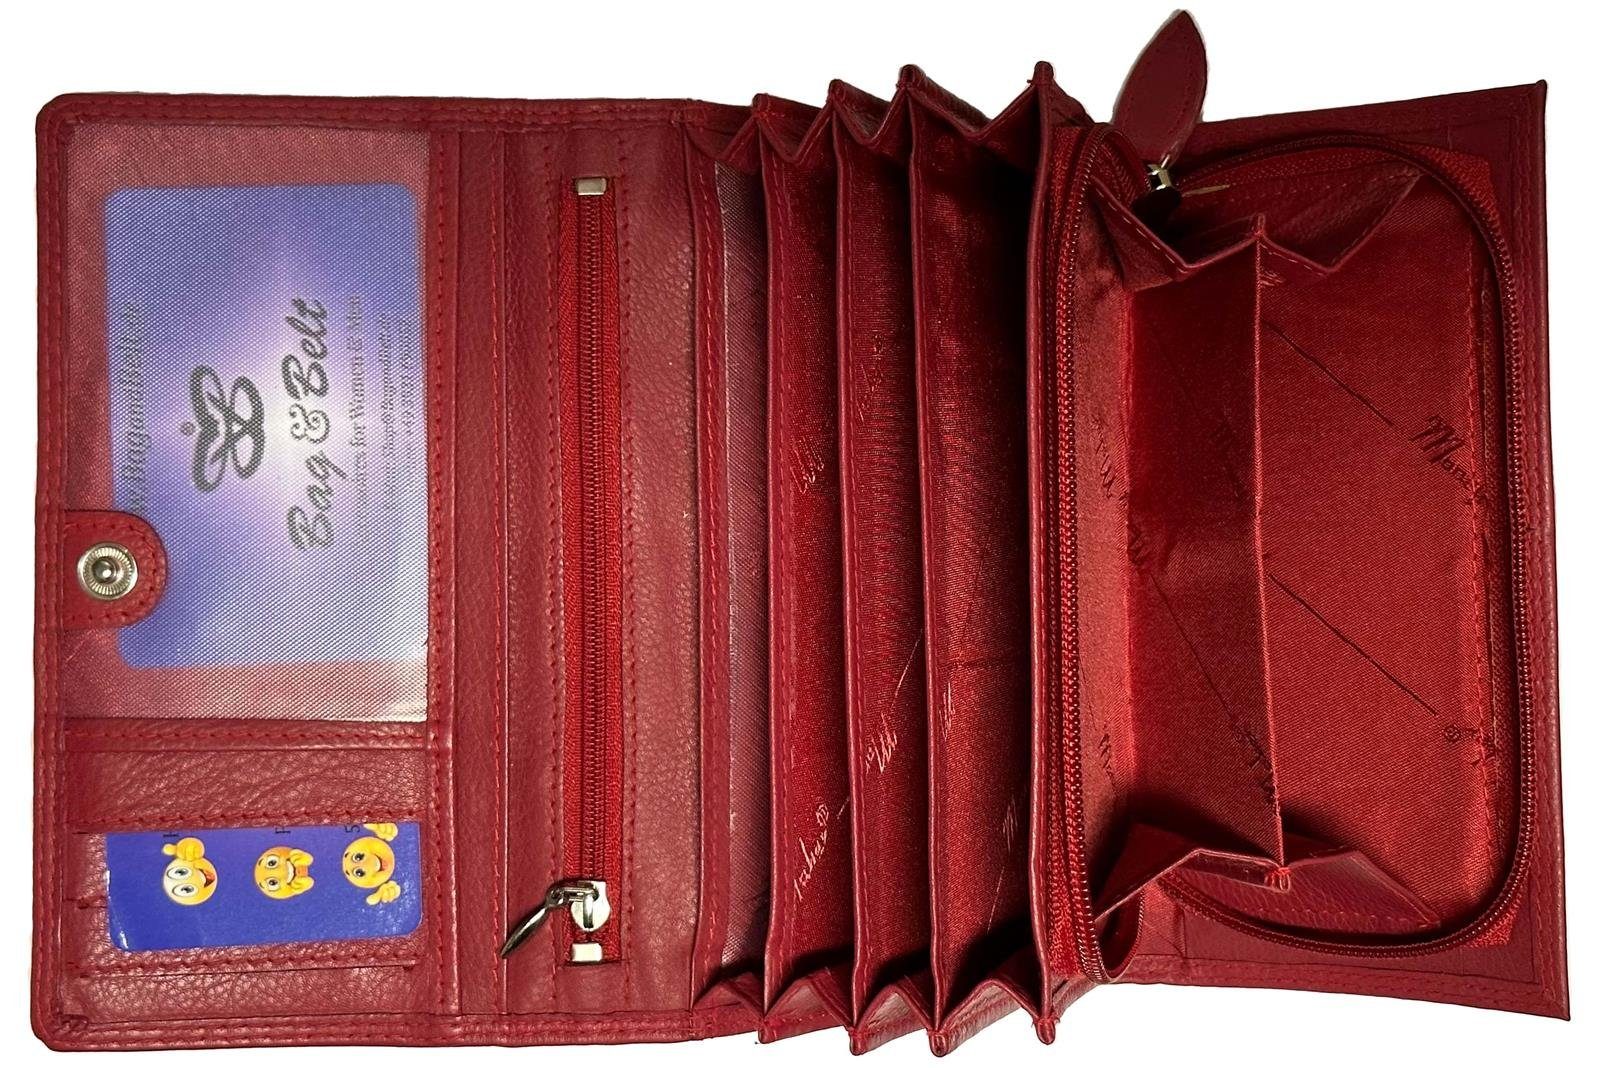 Jennifer Jones Geldbörse RFID, Damen Maker Portemonnaie Geldbeutel Money Leder Farbe: Geldbörse